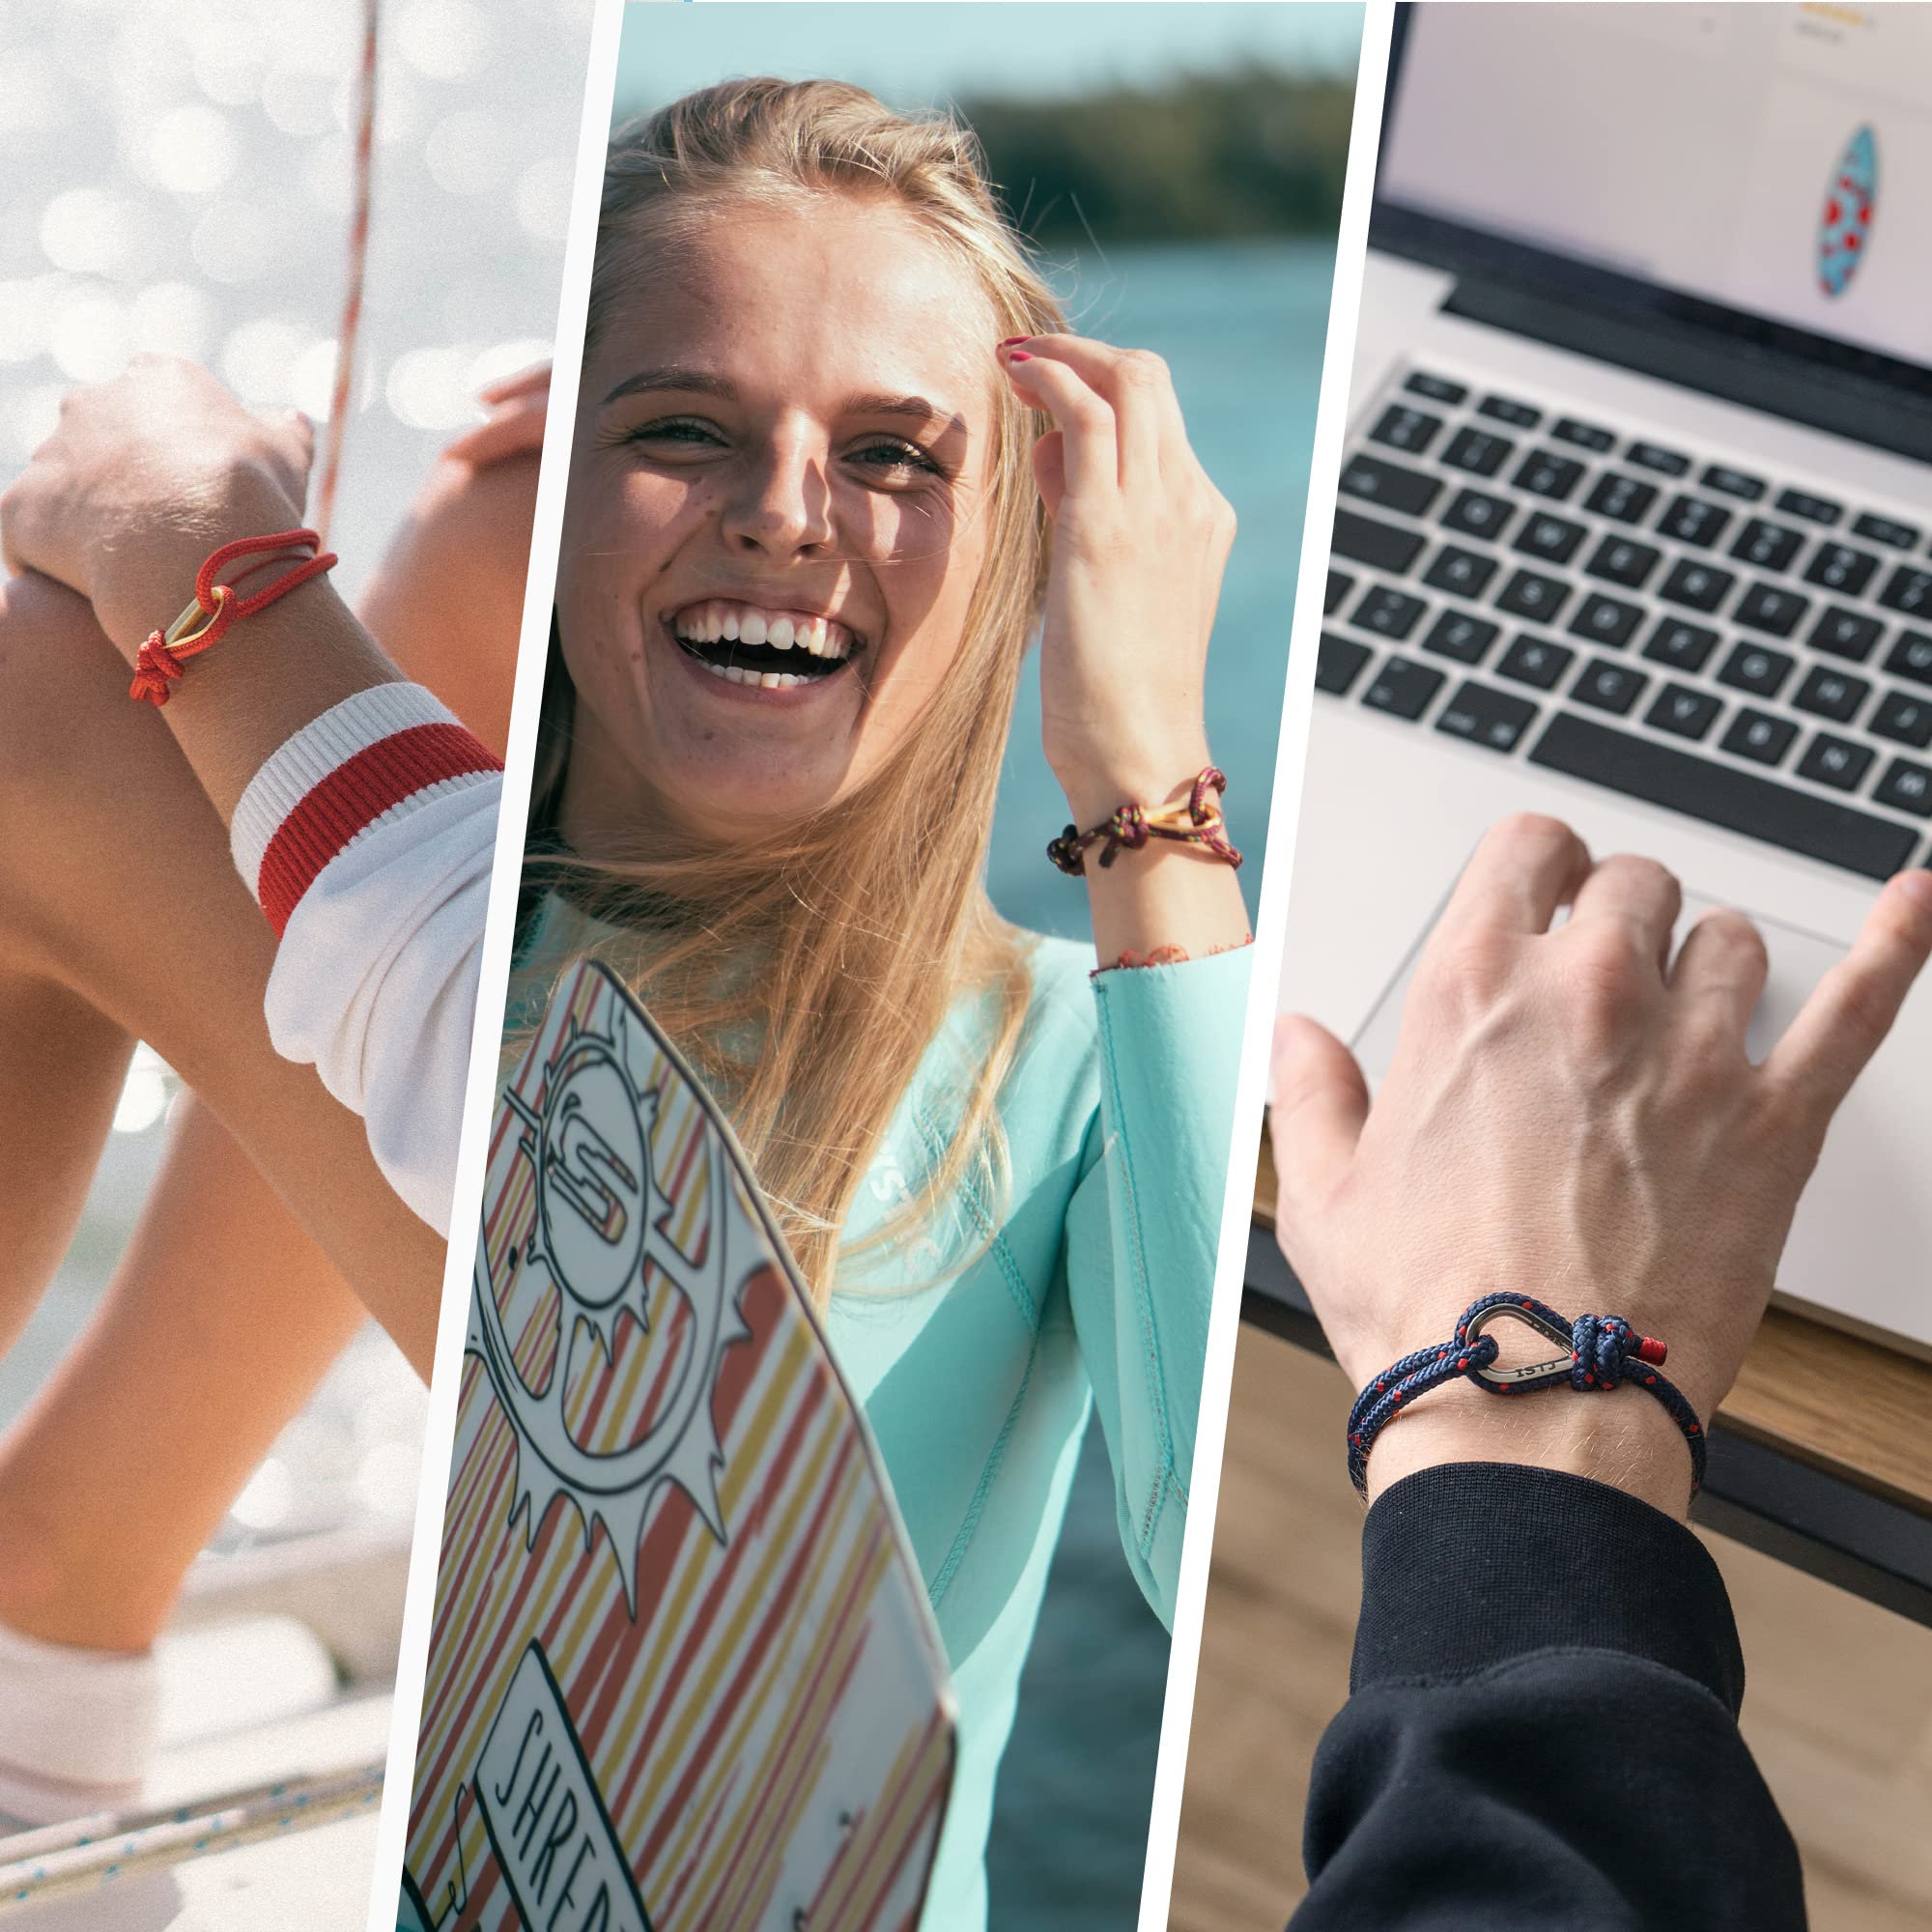 Shkertik Adjustable Nautical Bracelet for Adventure Seekers, Handmade Rope Bracelet for Men and Women, Life-Proof Nautical Rope Bracelet, Stylish Rope Bracelets to Tell Your Unique Story